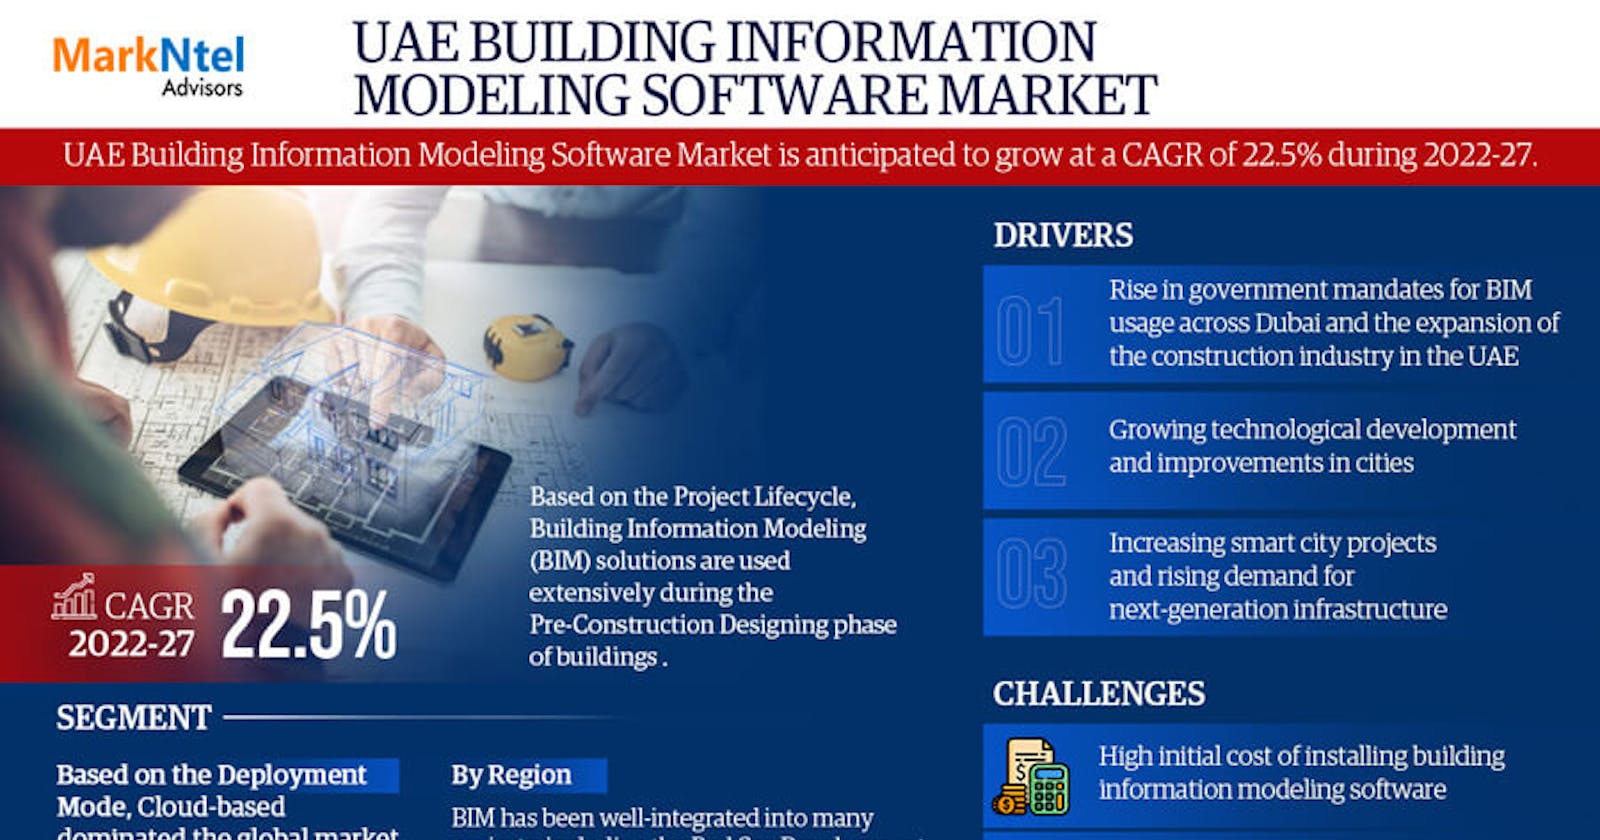 UAE Building Information Modeling Software Market Forecasts 22.5% CAGR Growth Through 2027